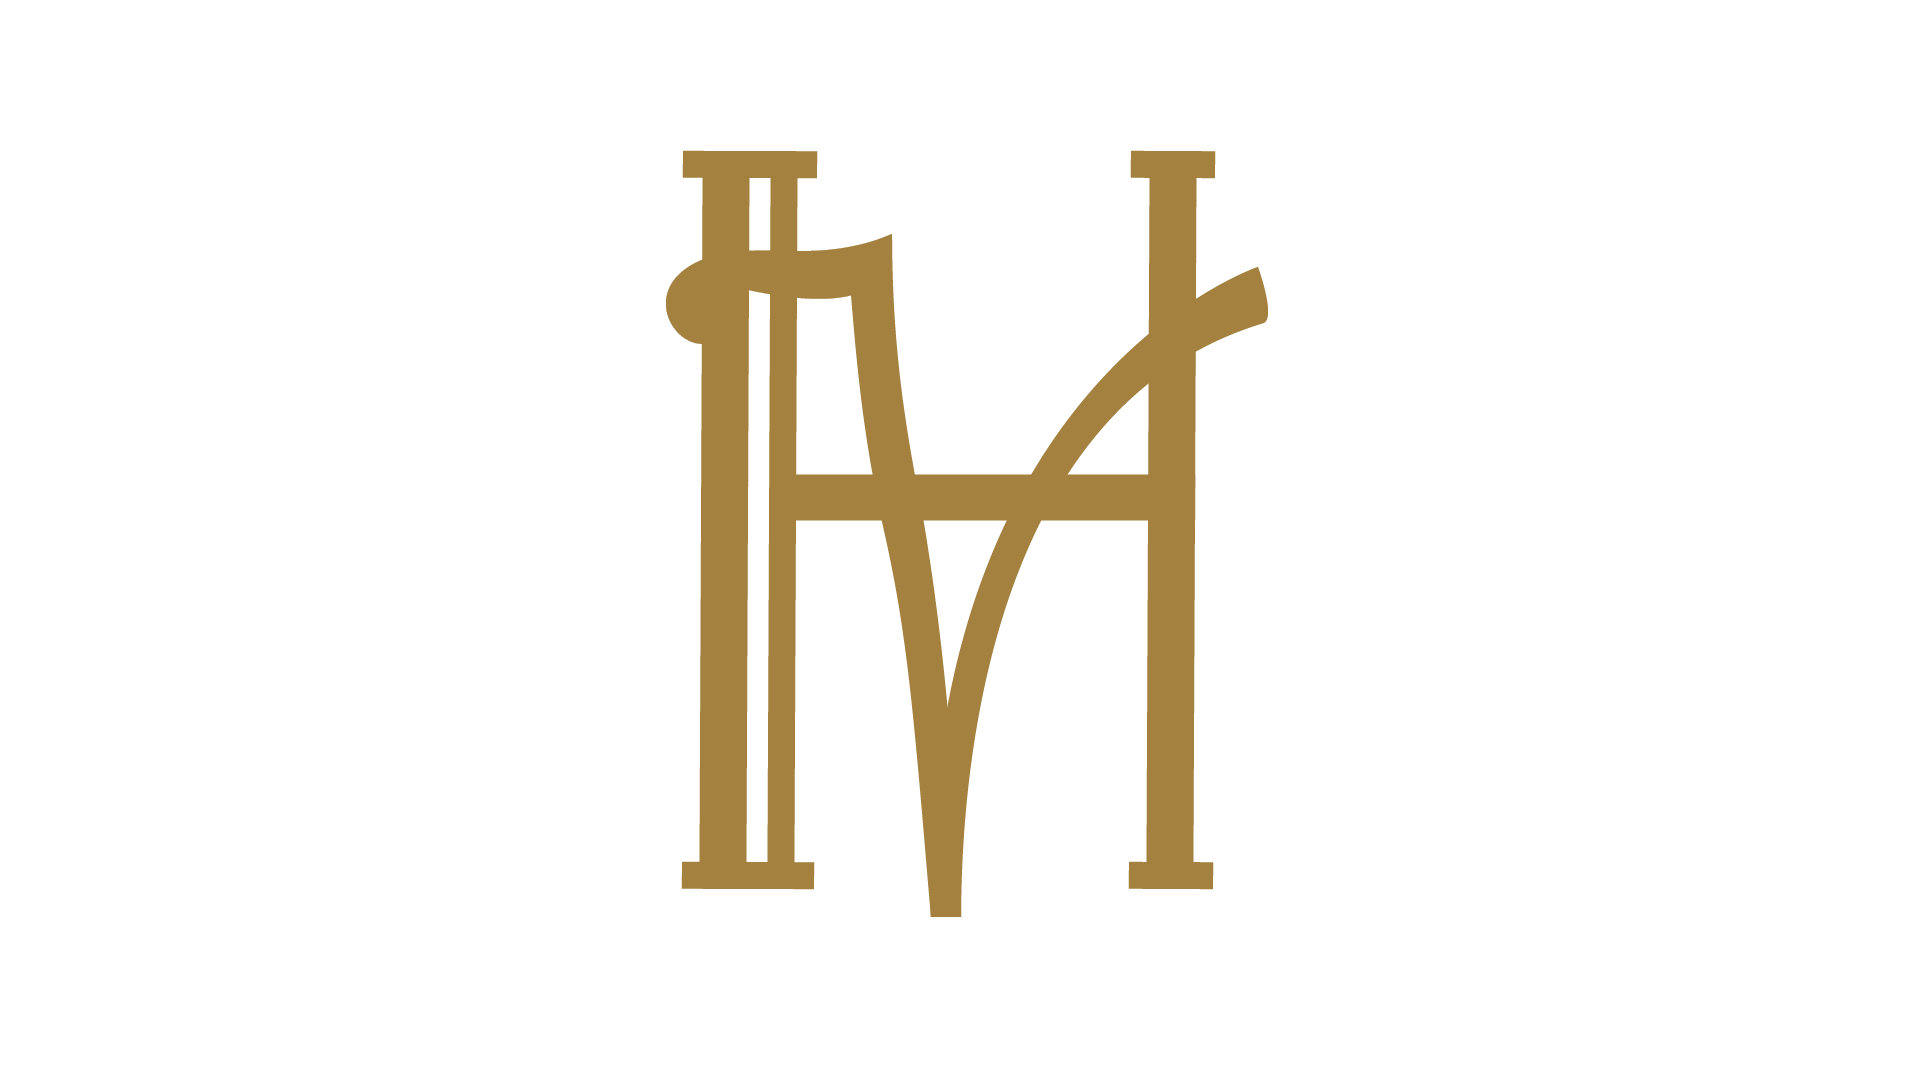 Logo Hôtel des Vosges